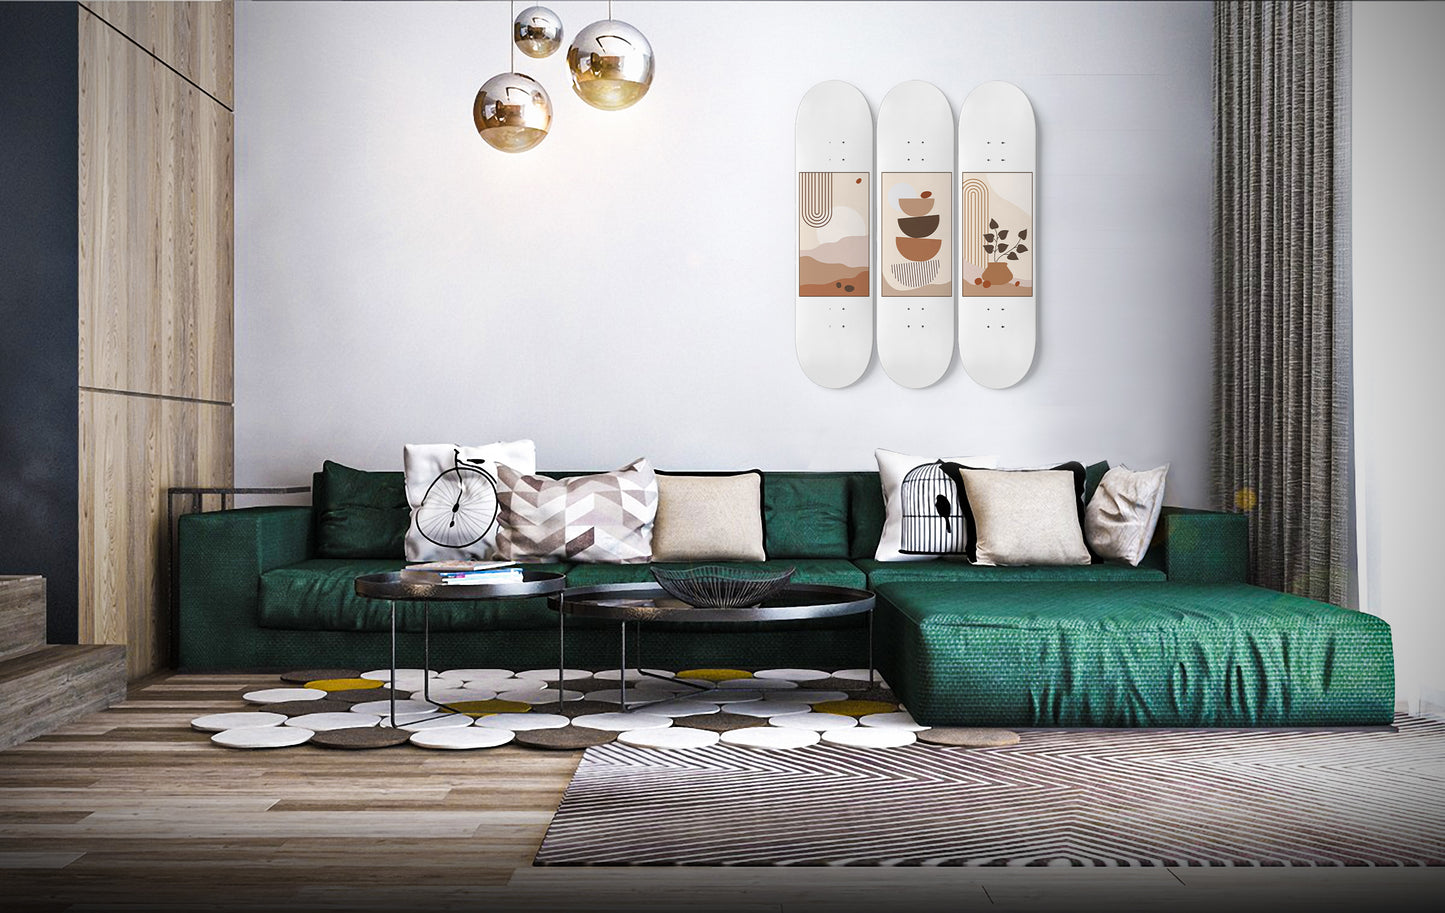 Terracotta Modern Mid Century Boho Wall Art | 3 - Piece Skateboard Wall Art, Boho Print Wall Hanging Art Living Room Decor